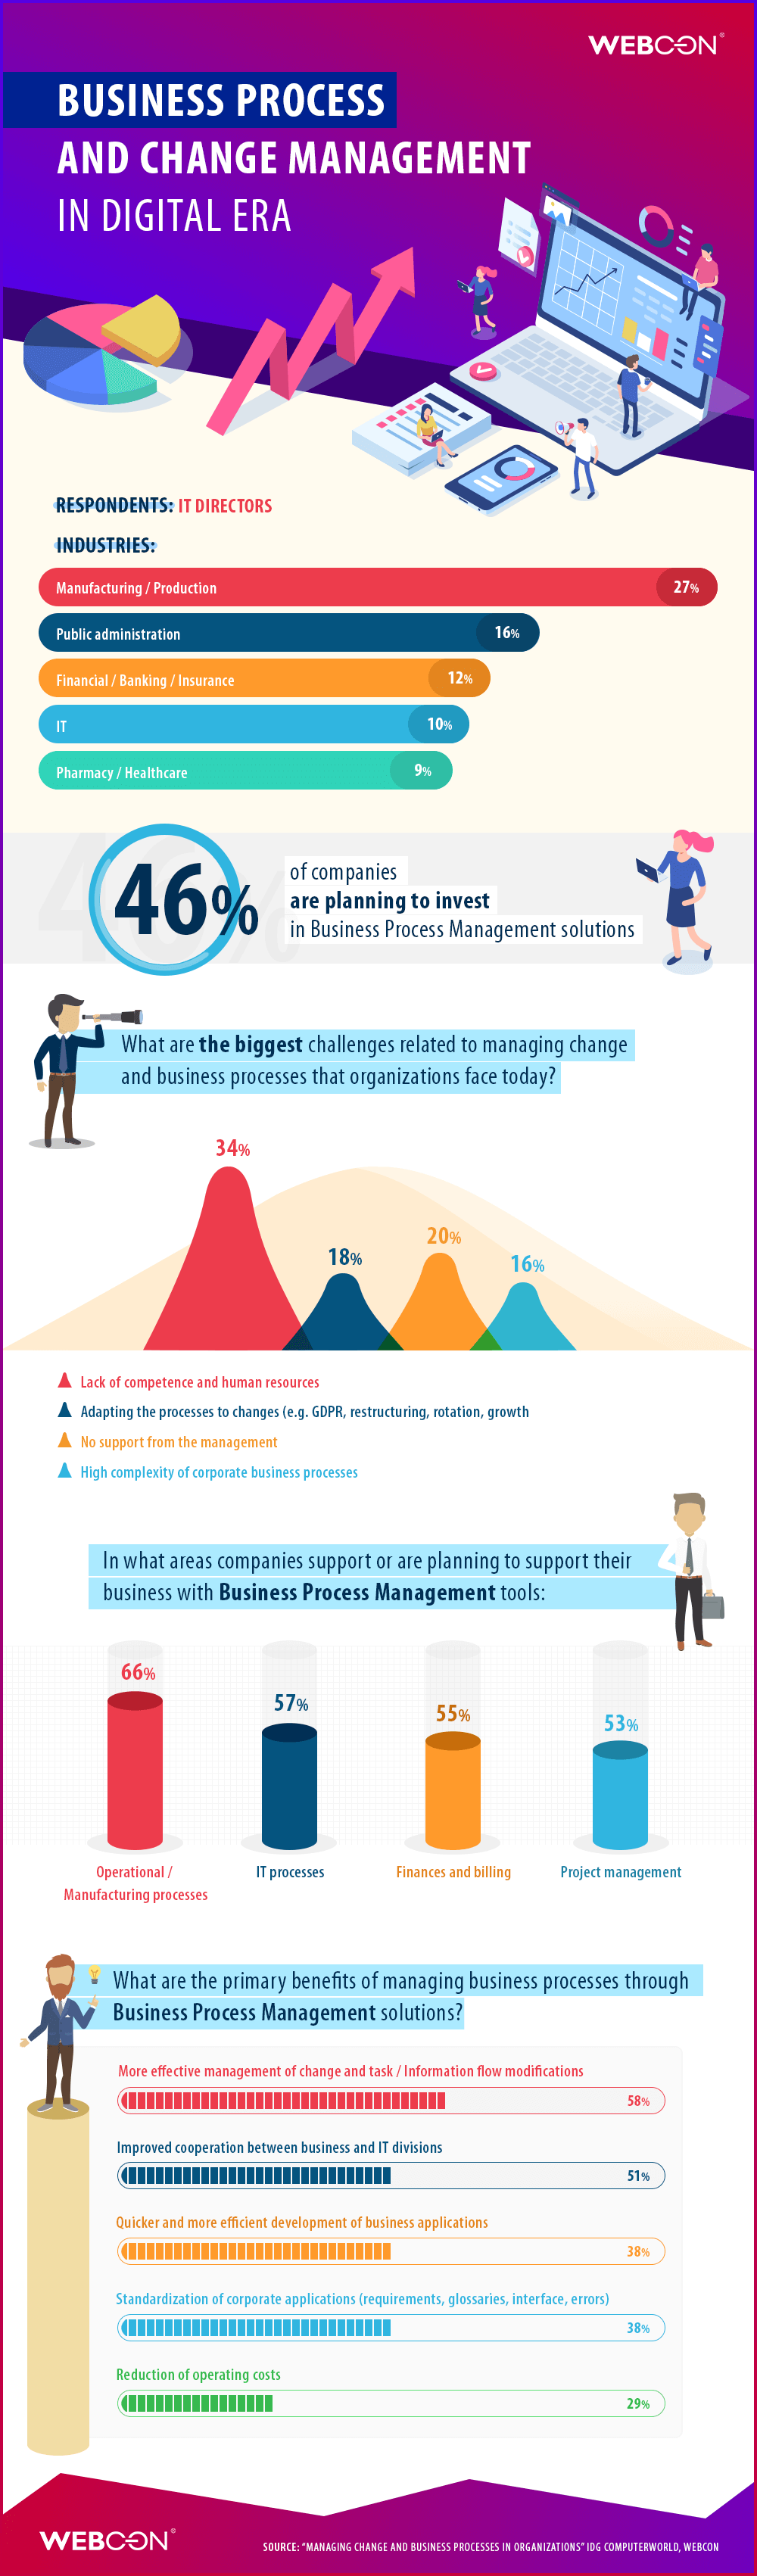 WEBCON Business Process Change Management infographic